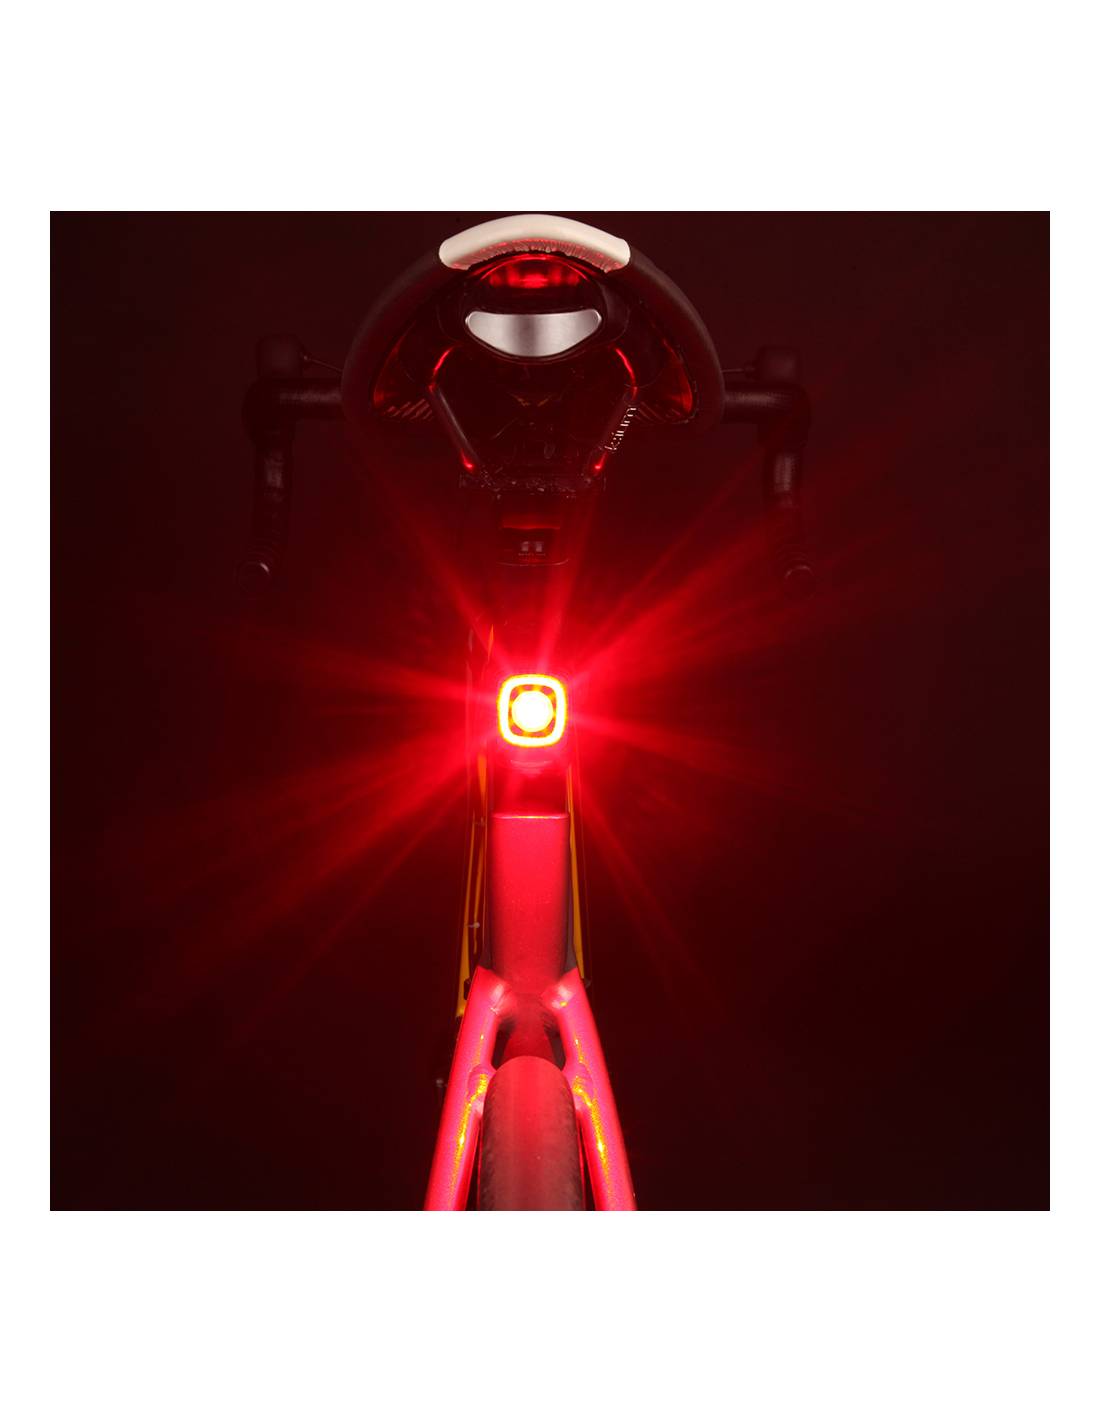 Luz Trasera Xclusive Para Bicicleta Rojo